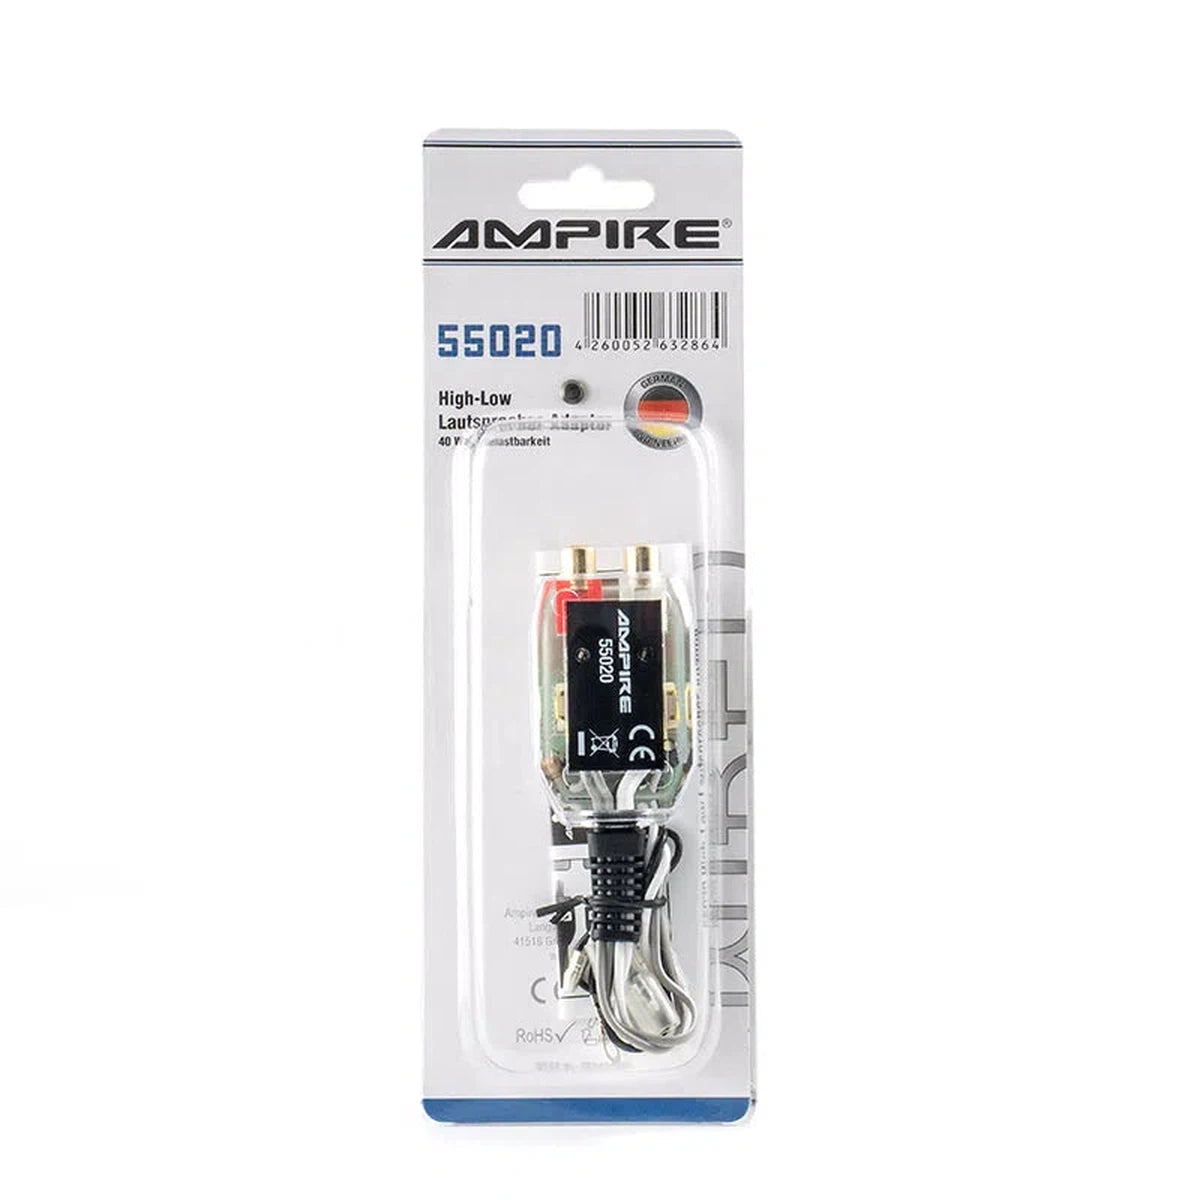 Ampire-HILO 55020-High-Low Adapter-Masori.de